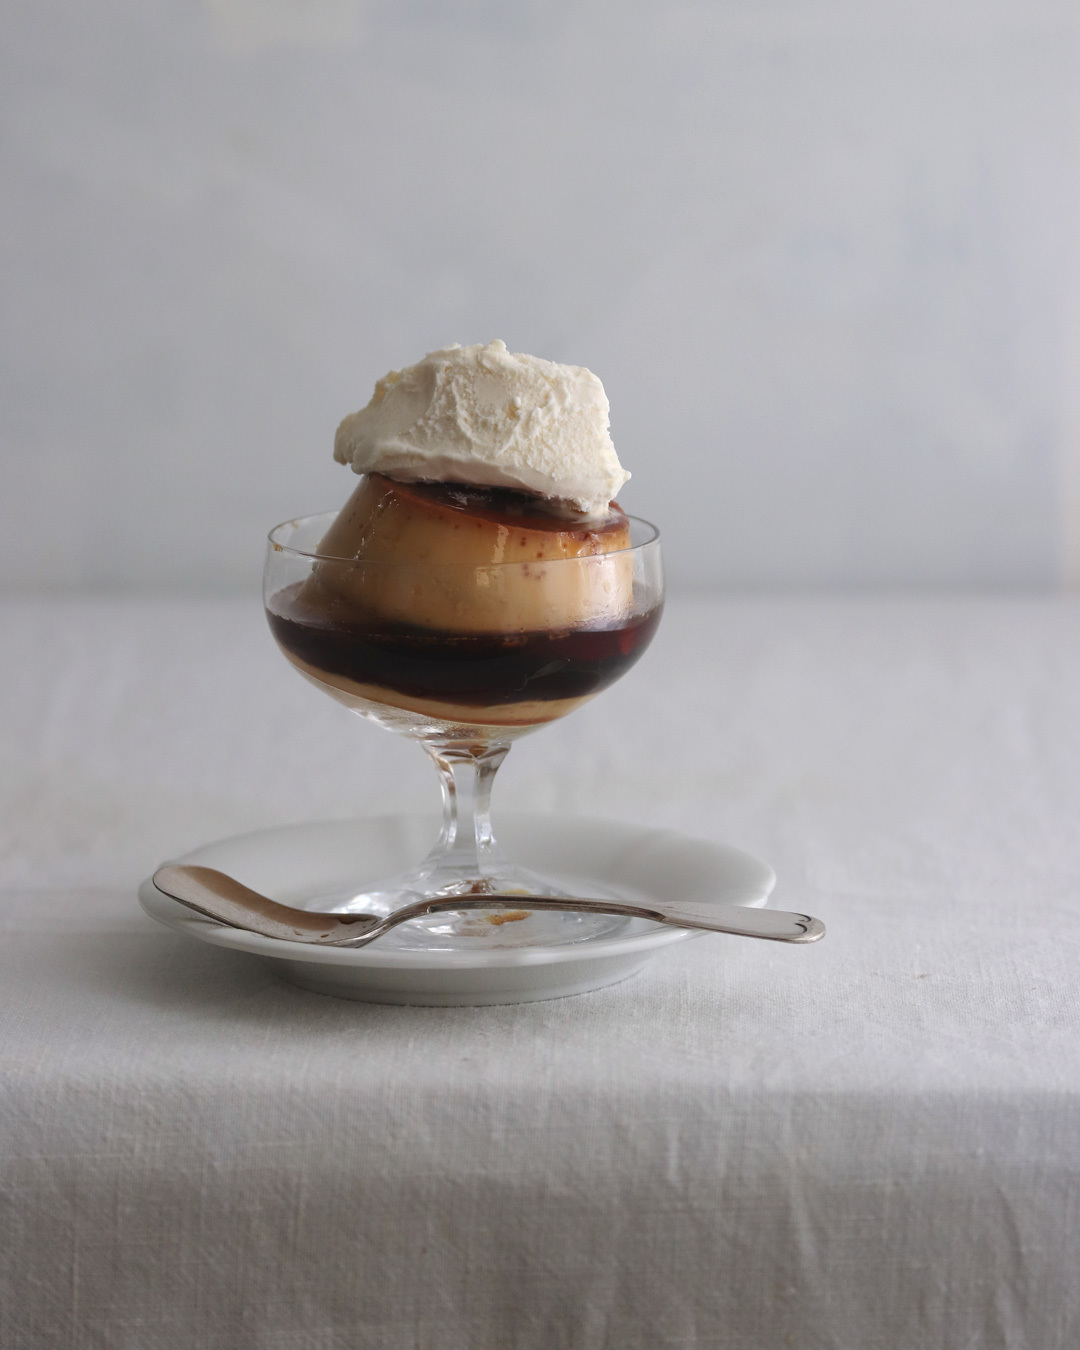 Pudding & vanilla ice cream